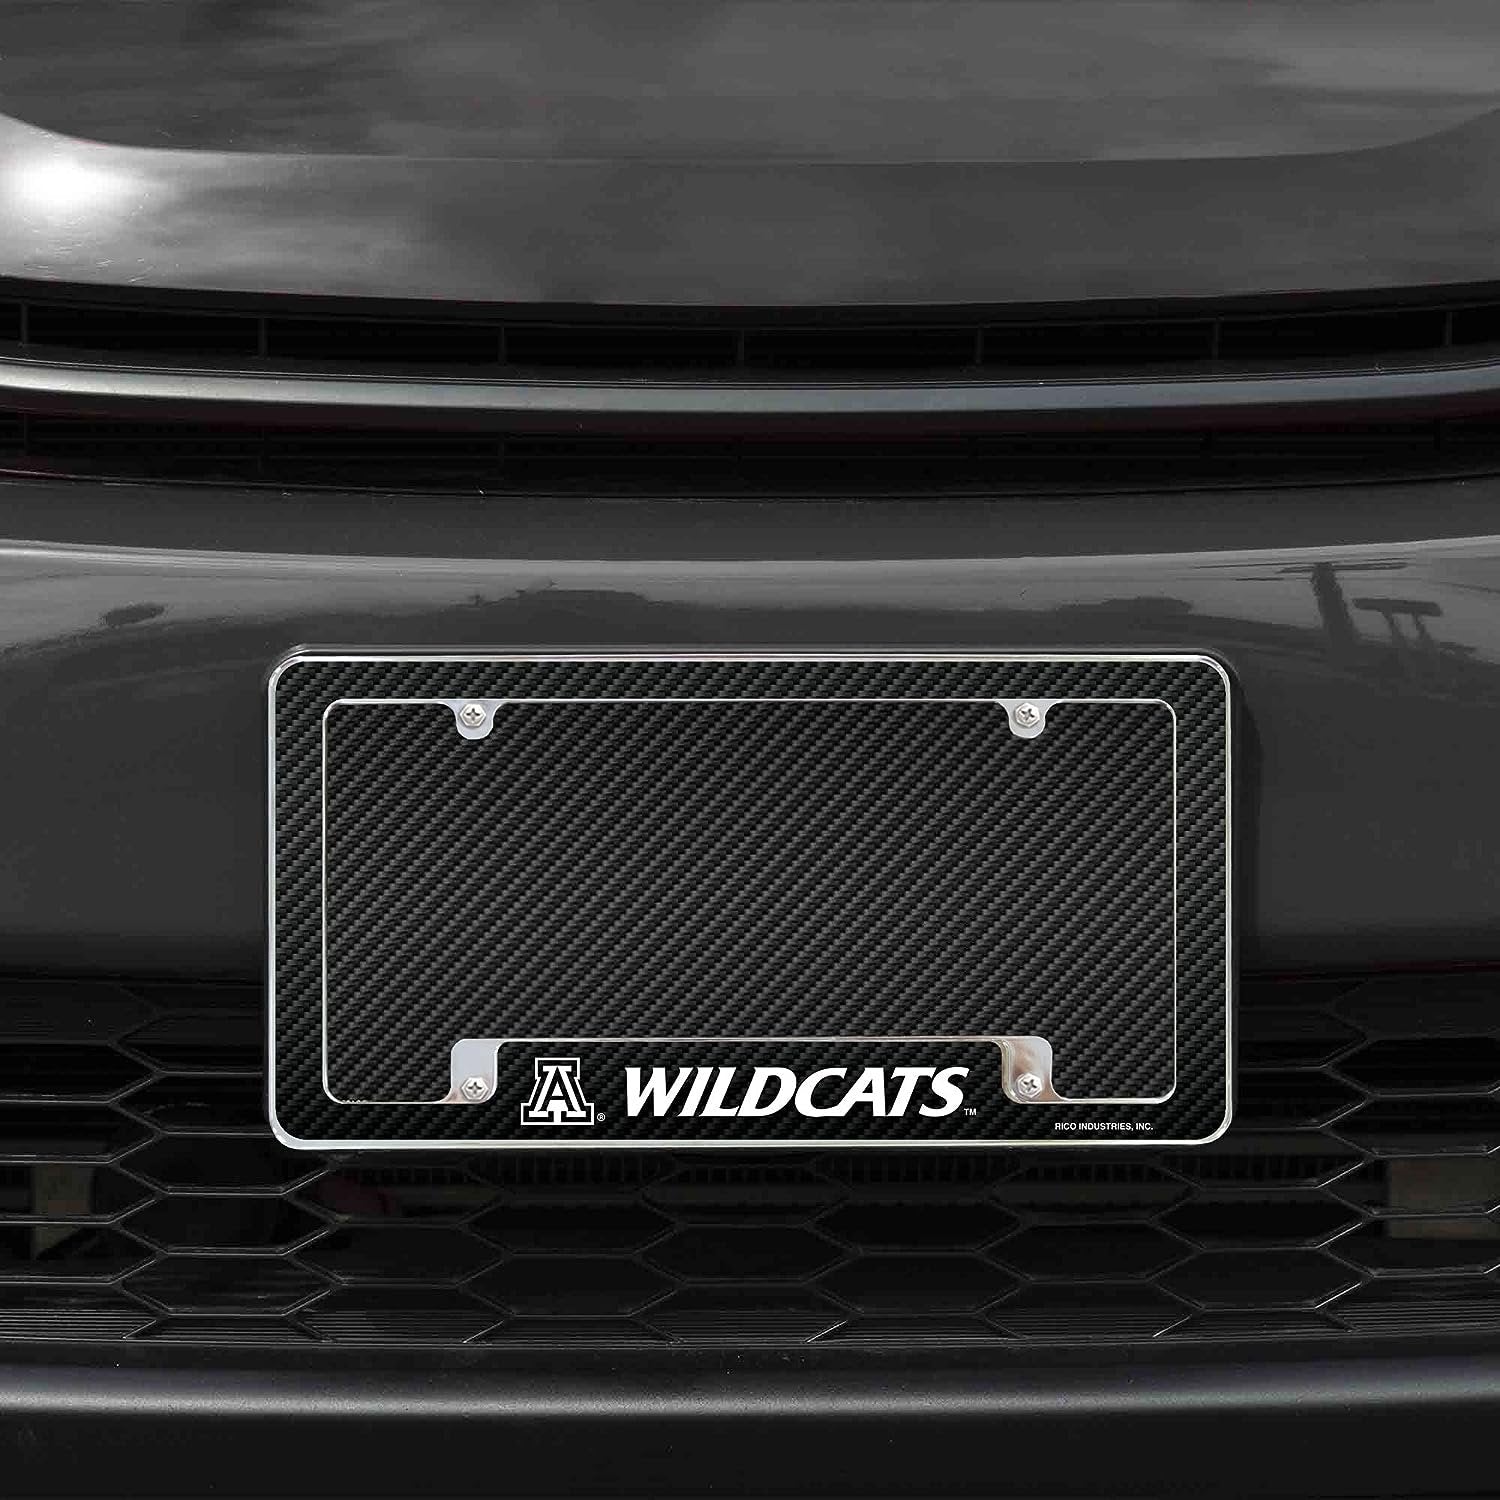 University of Arizona Wildcats Metal License Plate Frame Chrome Tag Cover 12x6 Inch Carbon Fiber Design